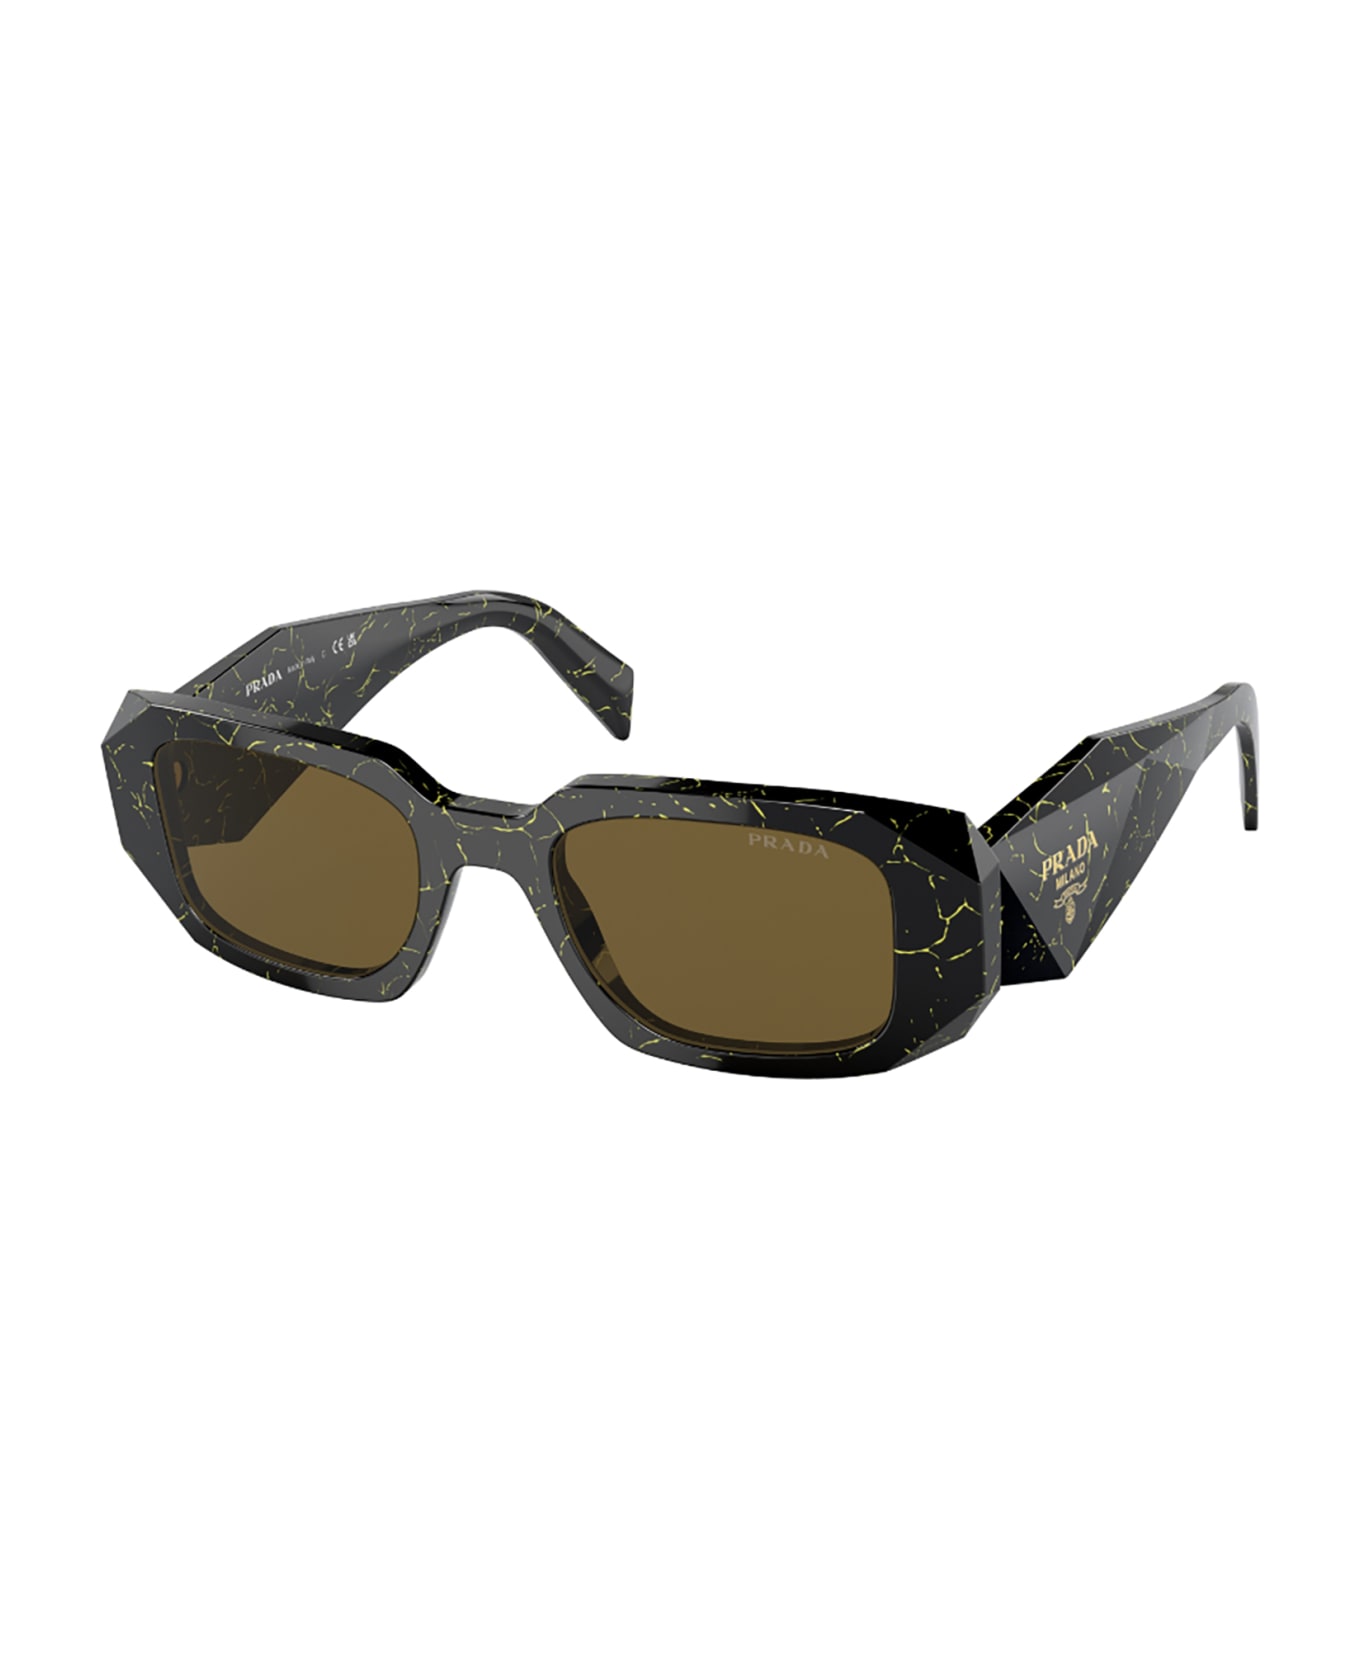 Prada Eyewear 17WS SOLE Sunglasses - T